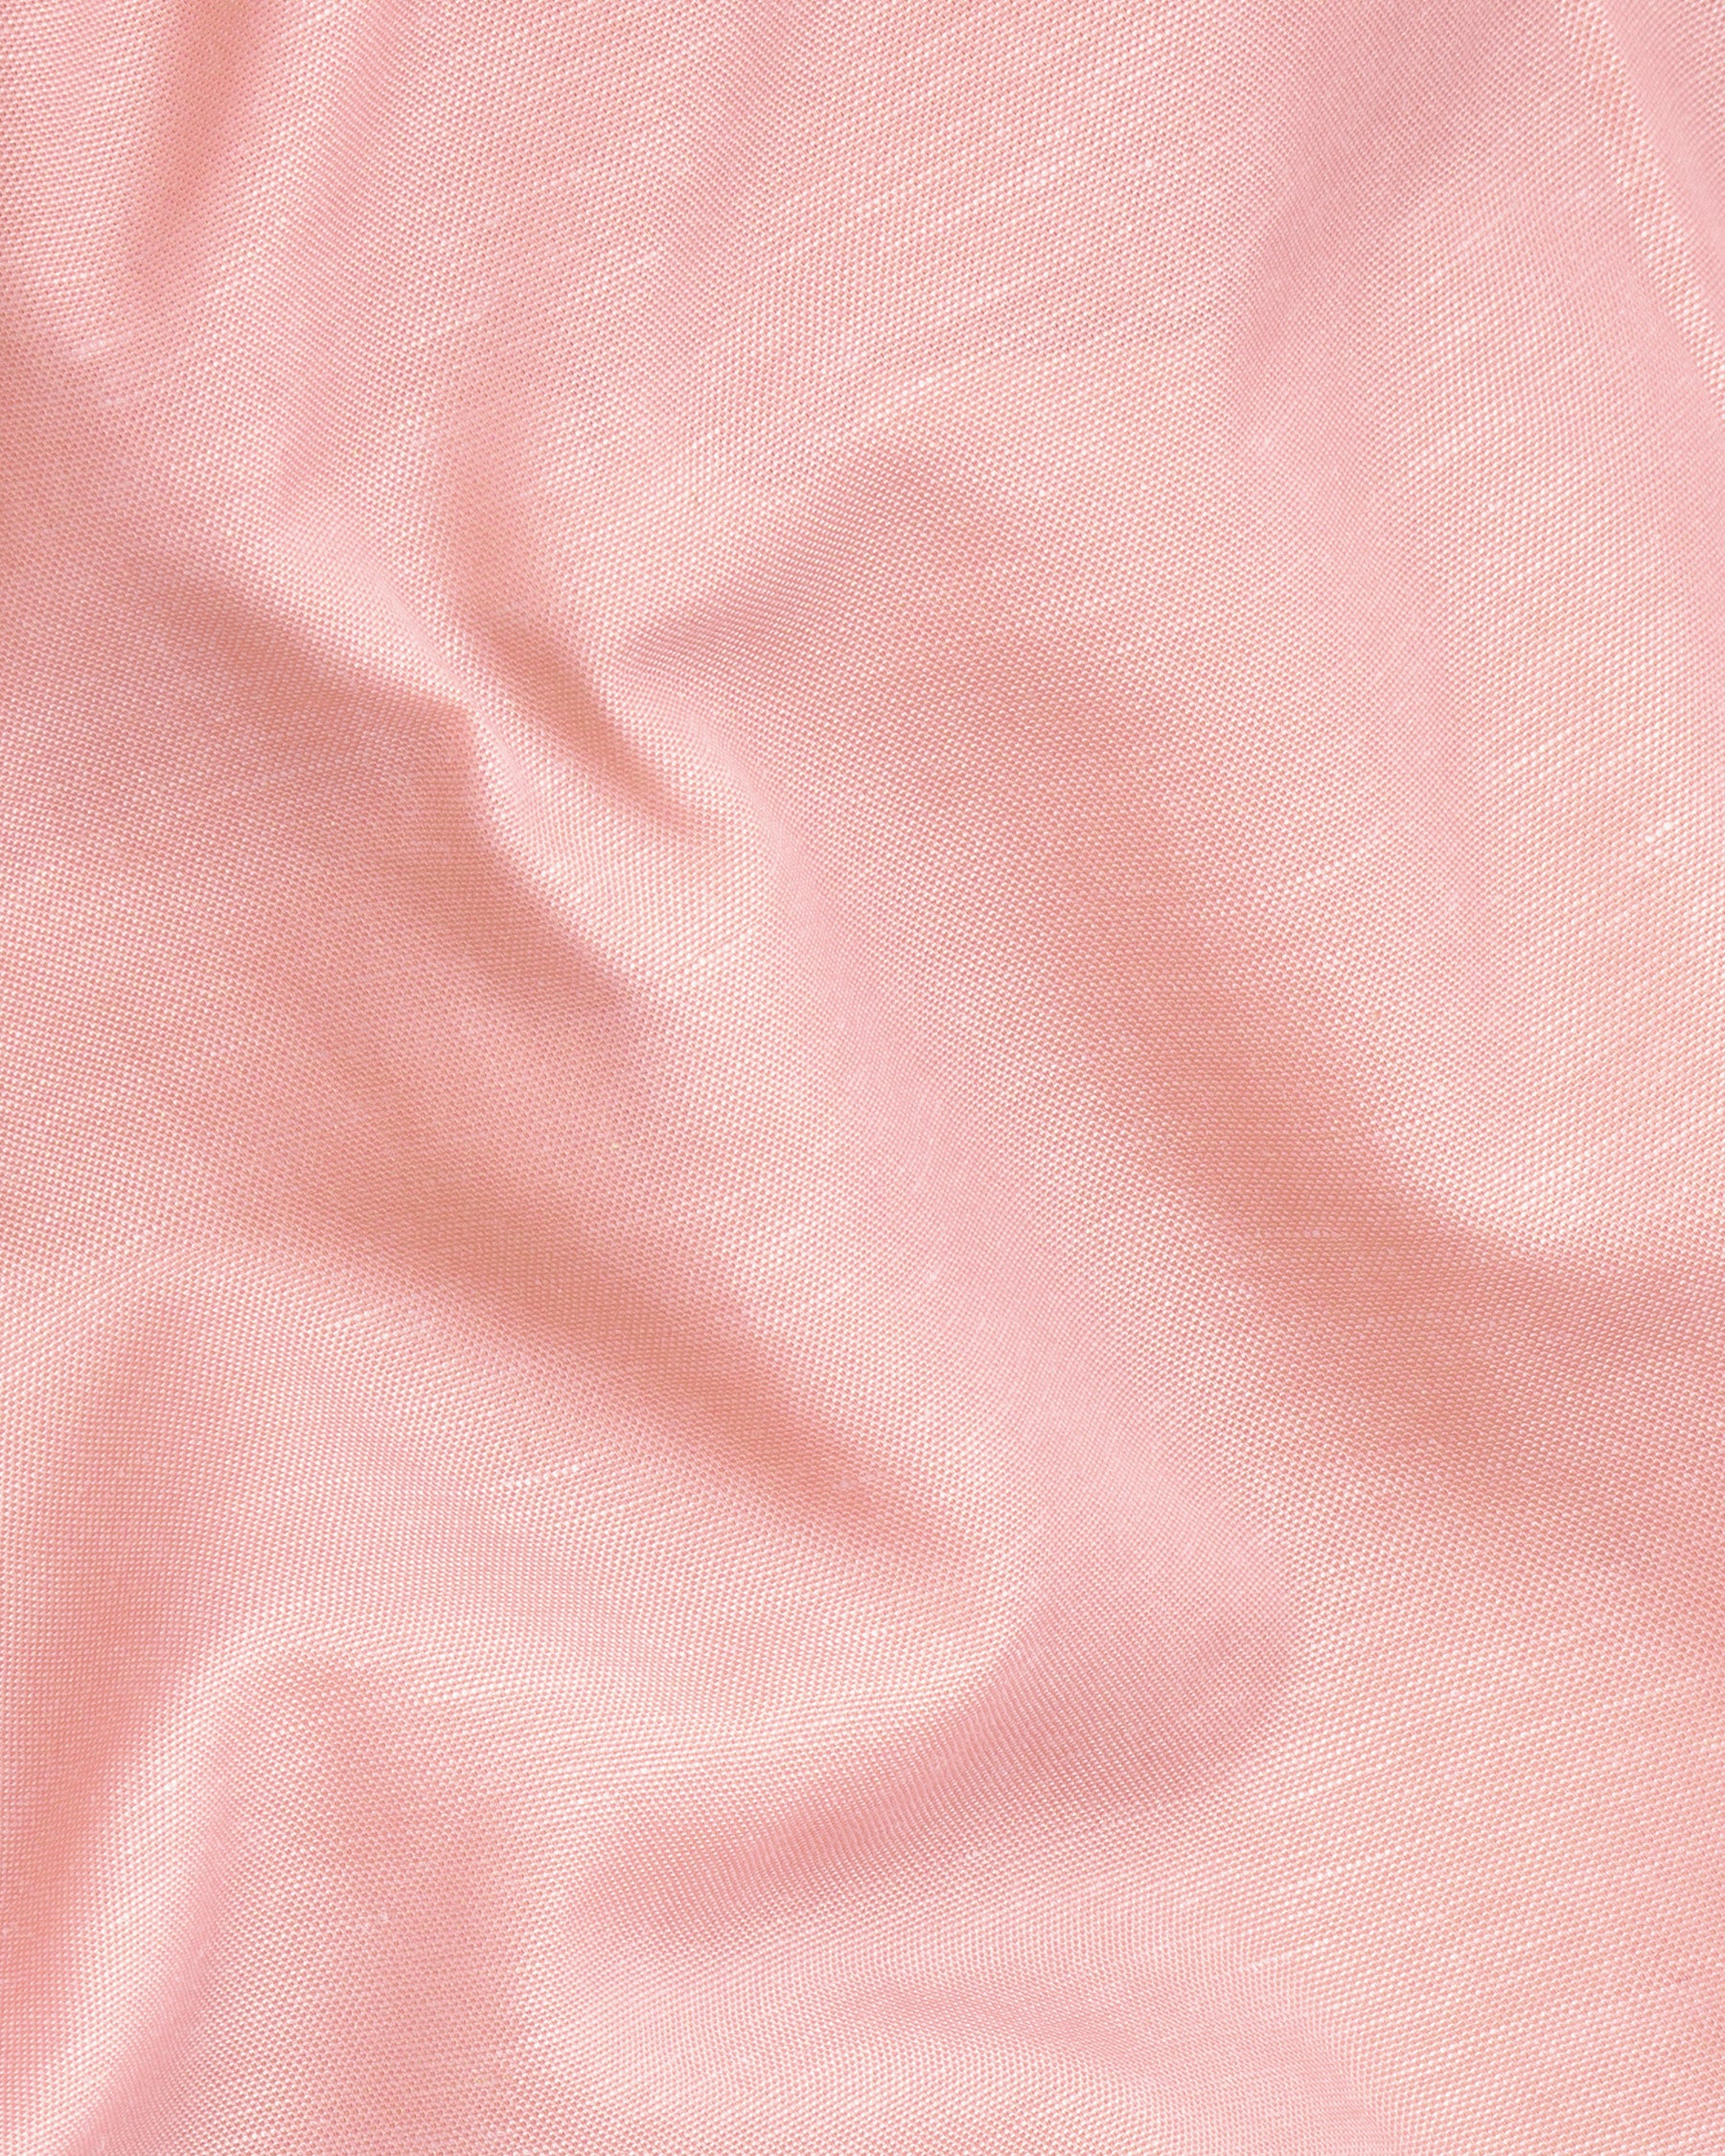 Rose Bud Pink Luxurious Linen Lounge Pant LP154-28, LP154-30, LP154-32, LP154-34, LP154-36, LP154-38, LP154-40, LP154-42, LP154-44